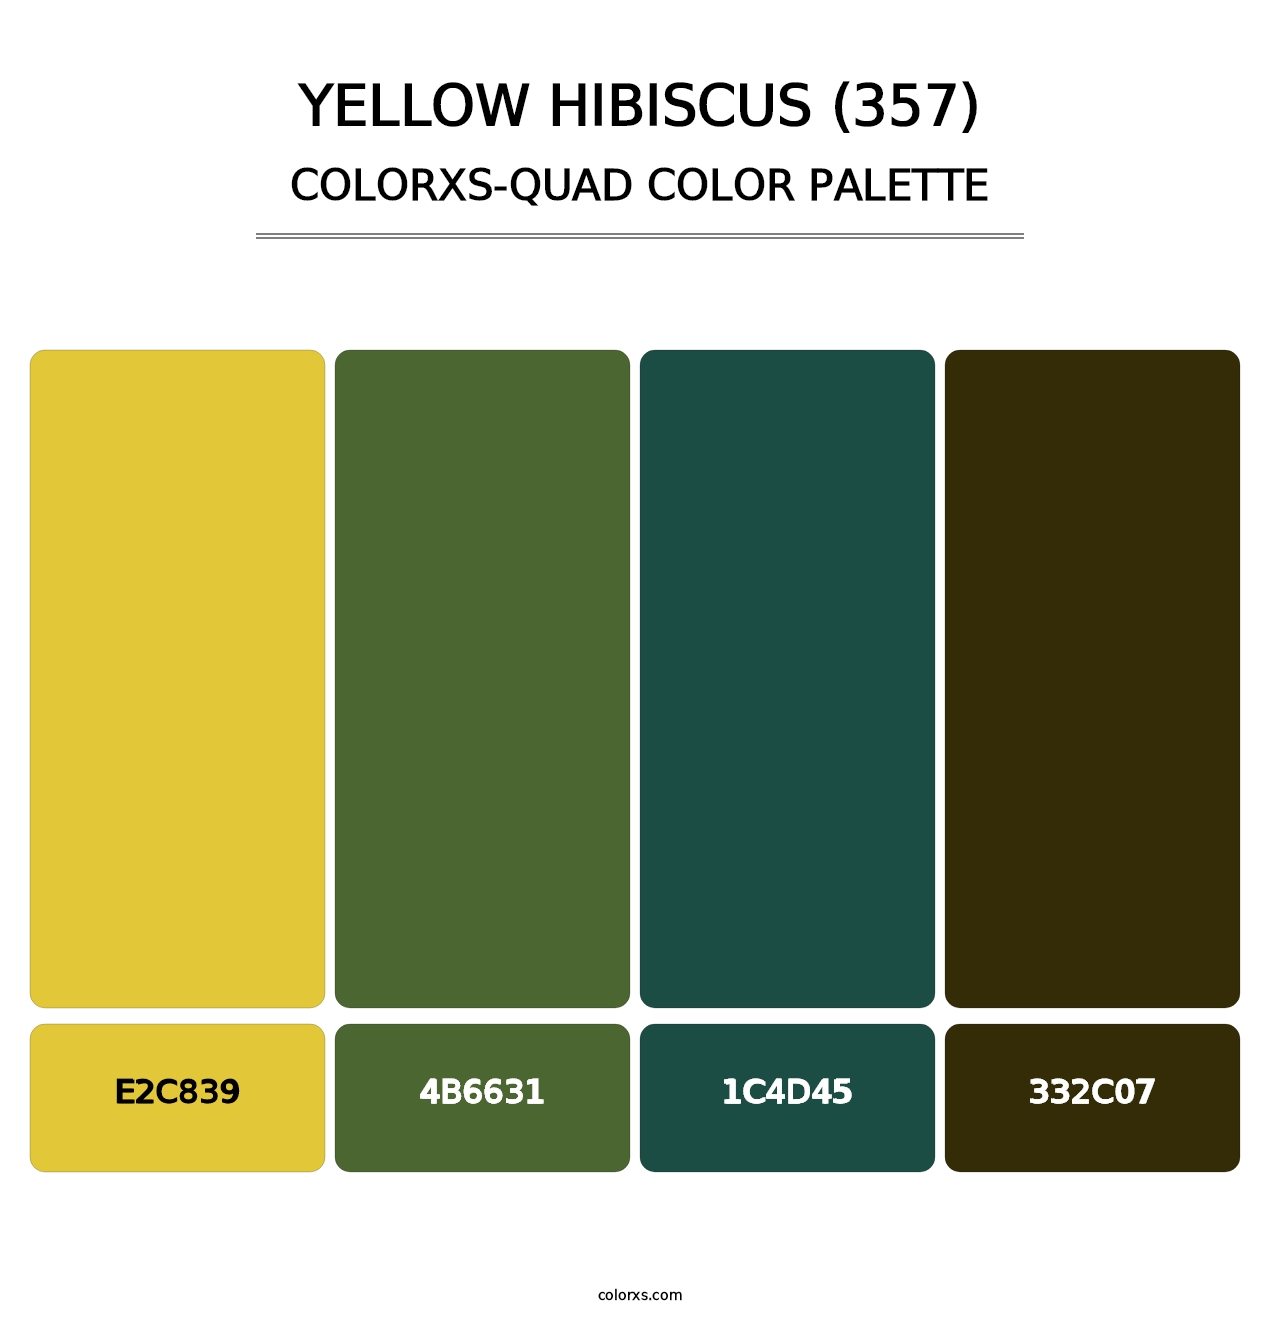 Yellow Hibiscus (357) - Colorxs Quad Palette